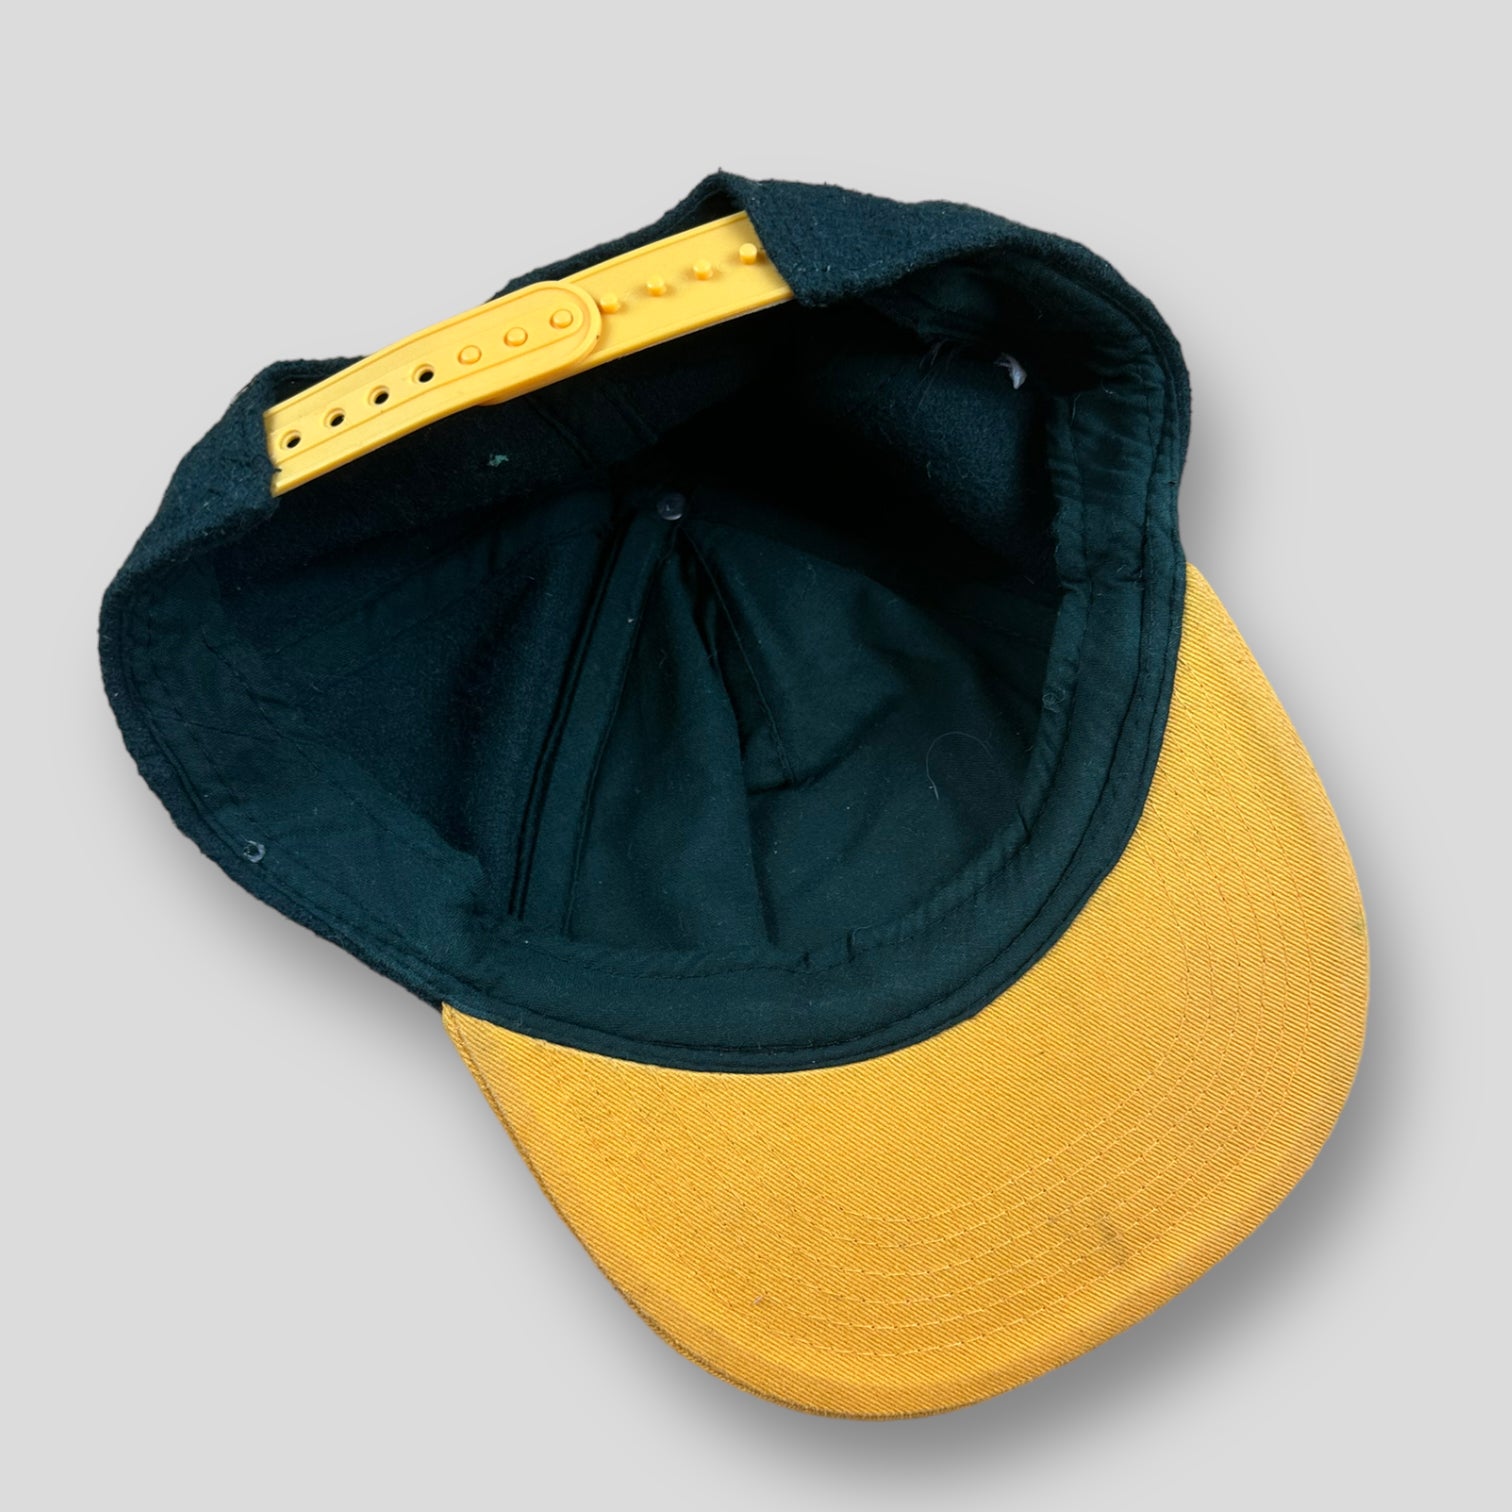 Vintage cap